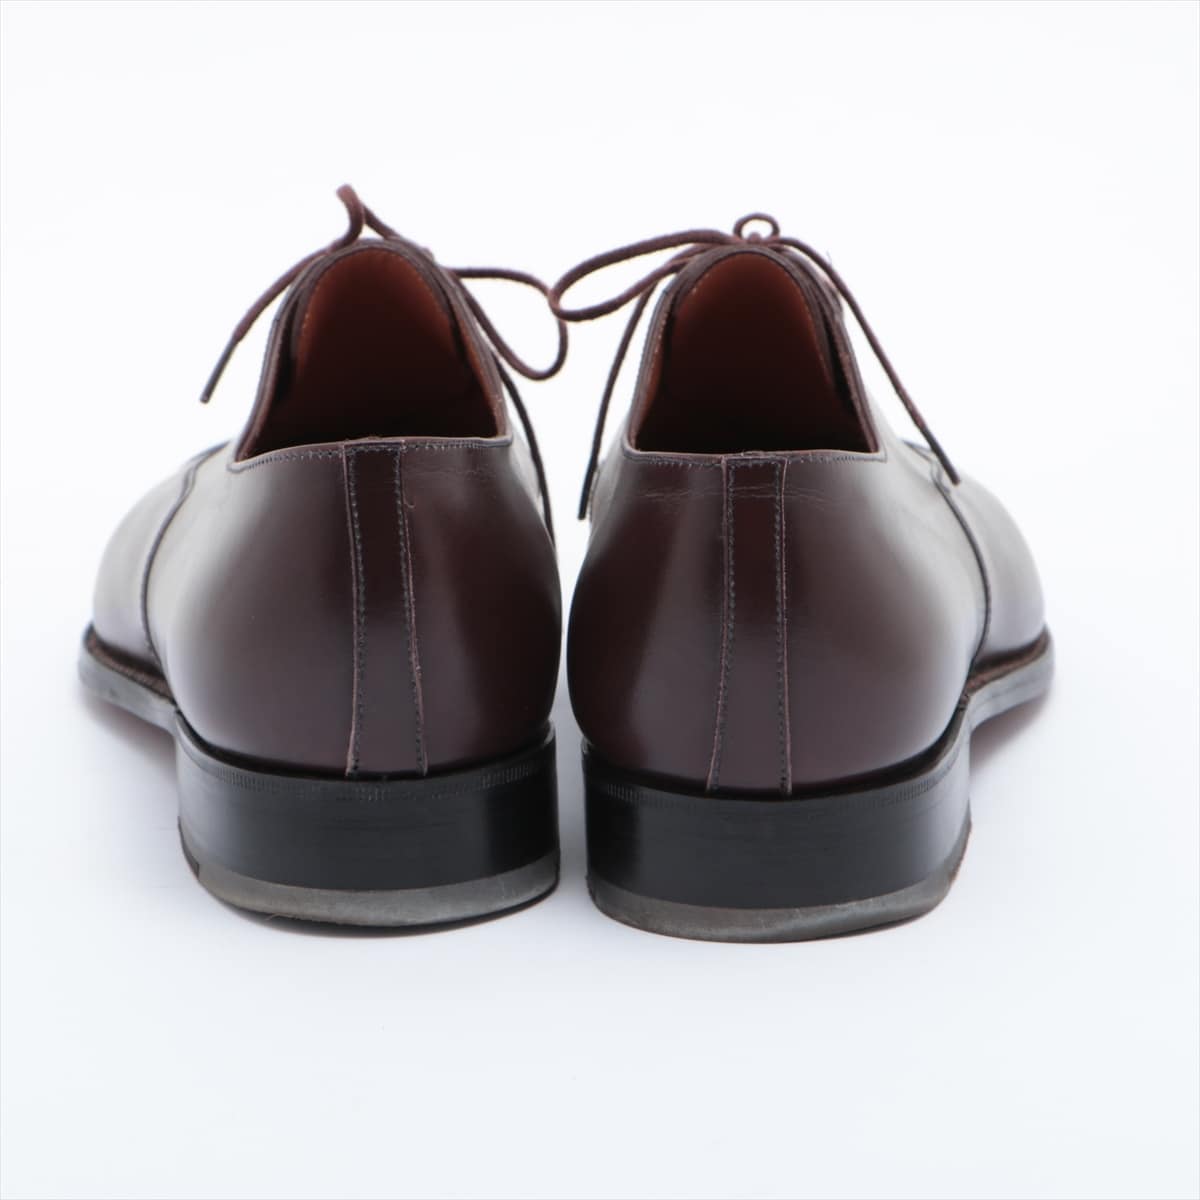 J. M. Weston Leather Leather shoes 8 Men's Brown classic cap toe